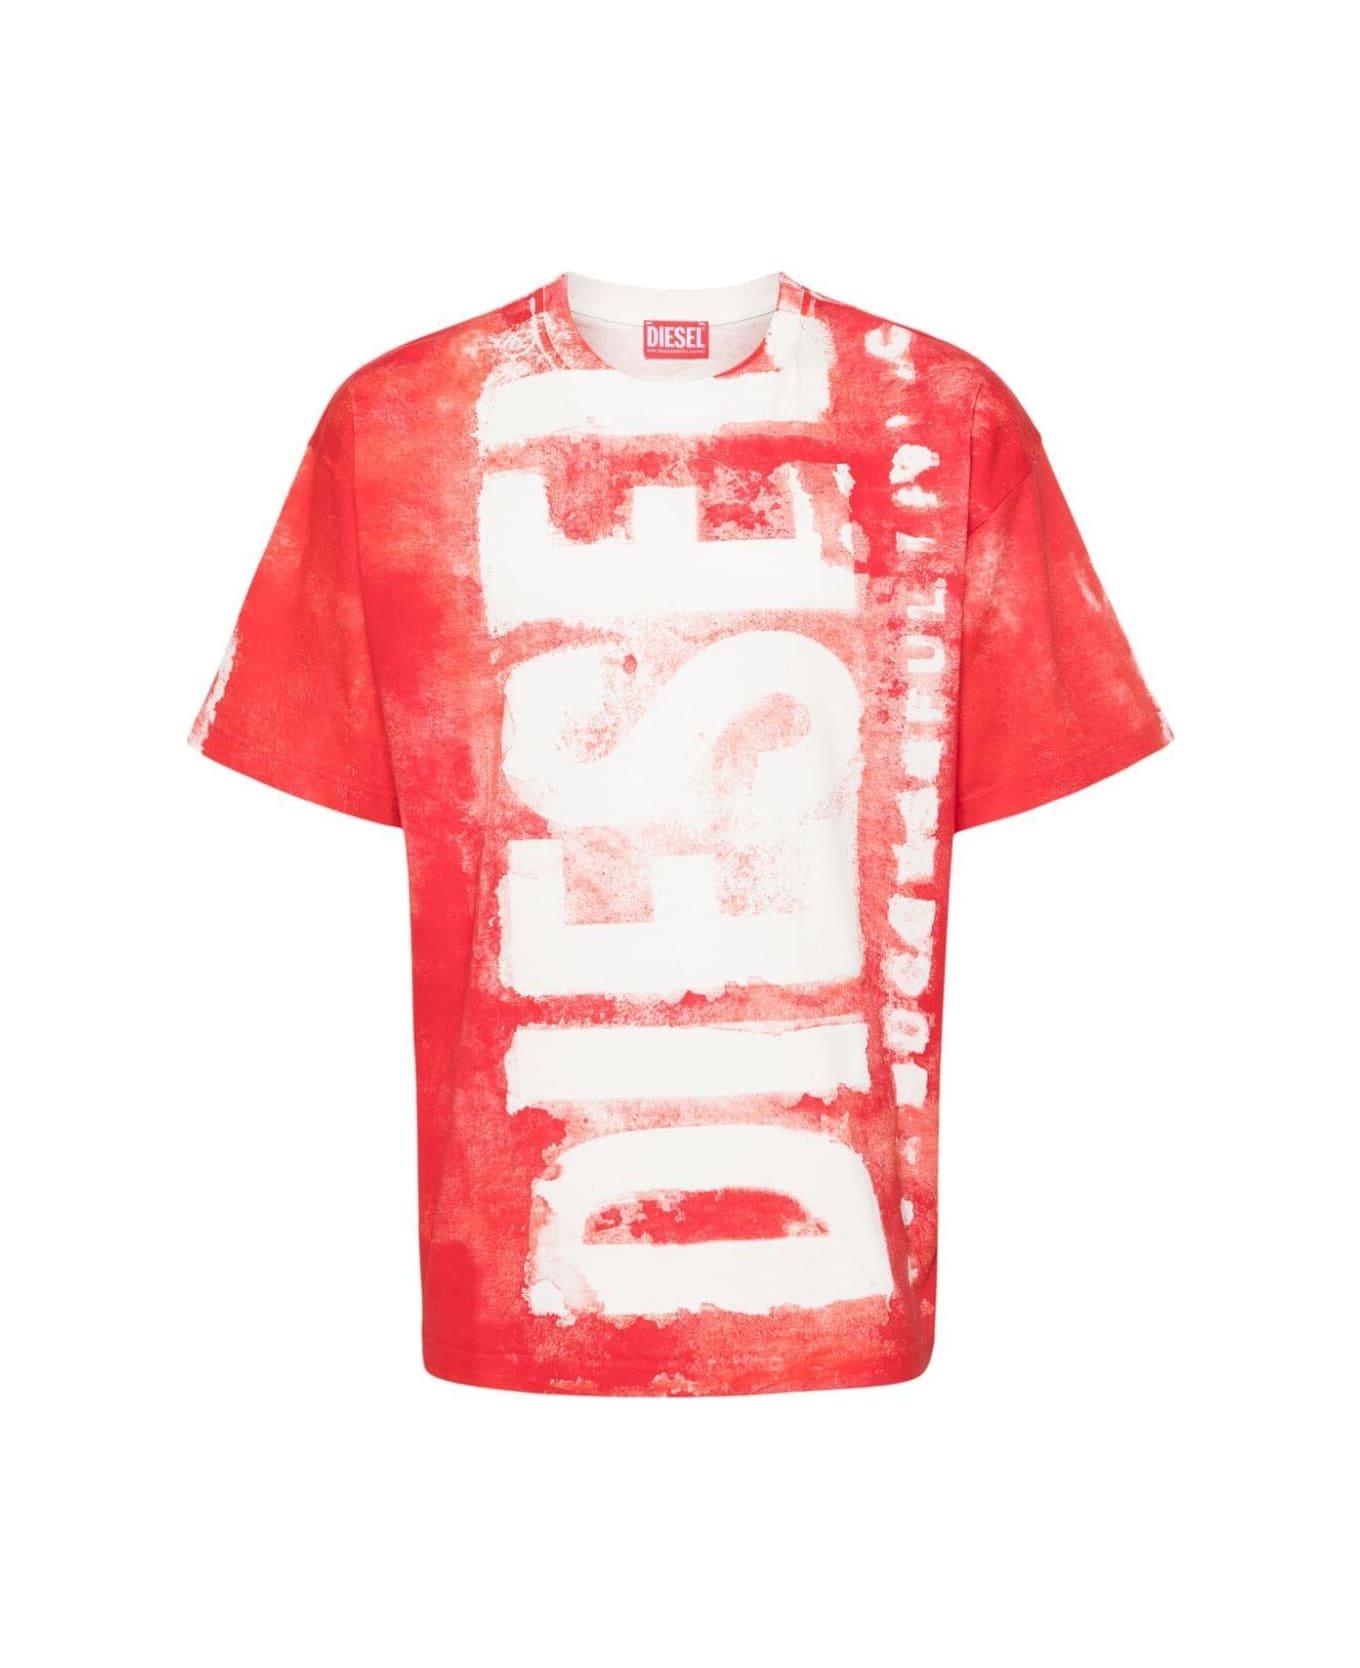 Diesel Bosxt Bisc T-shirt - Aa Red Multi シャツ